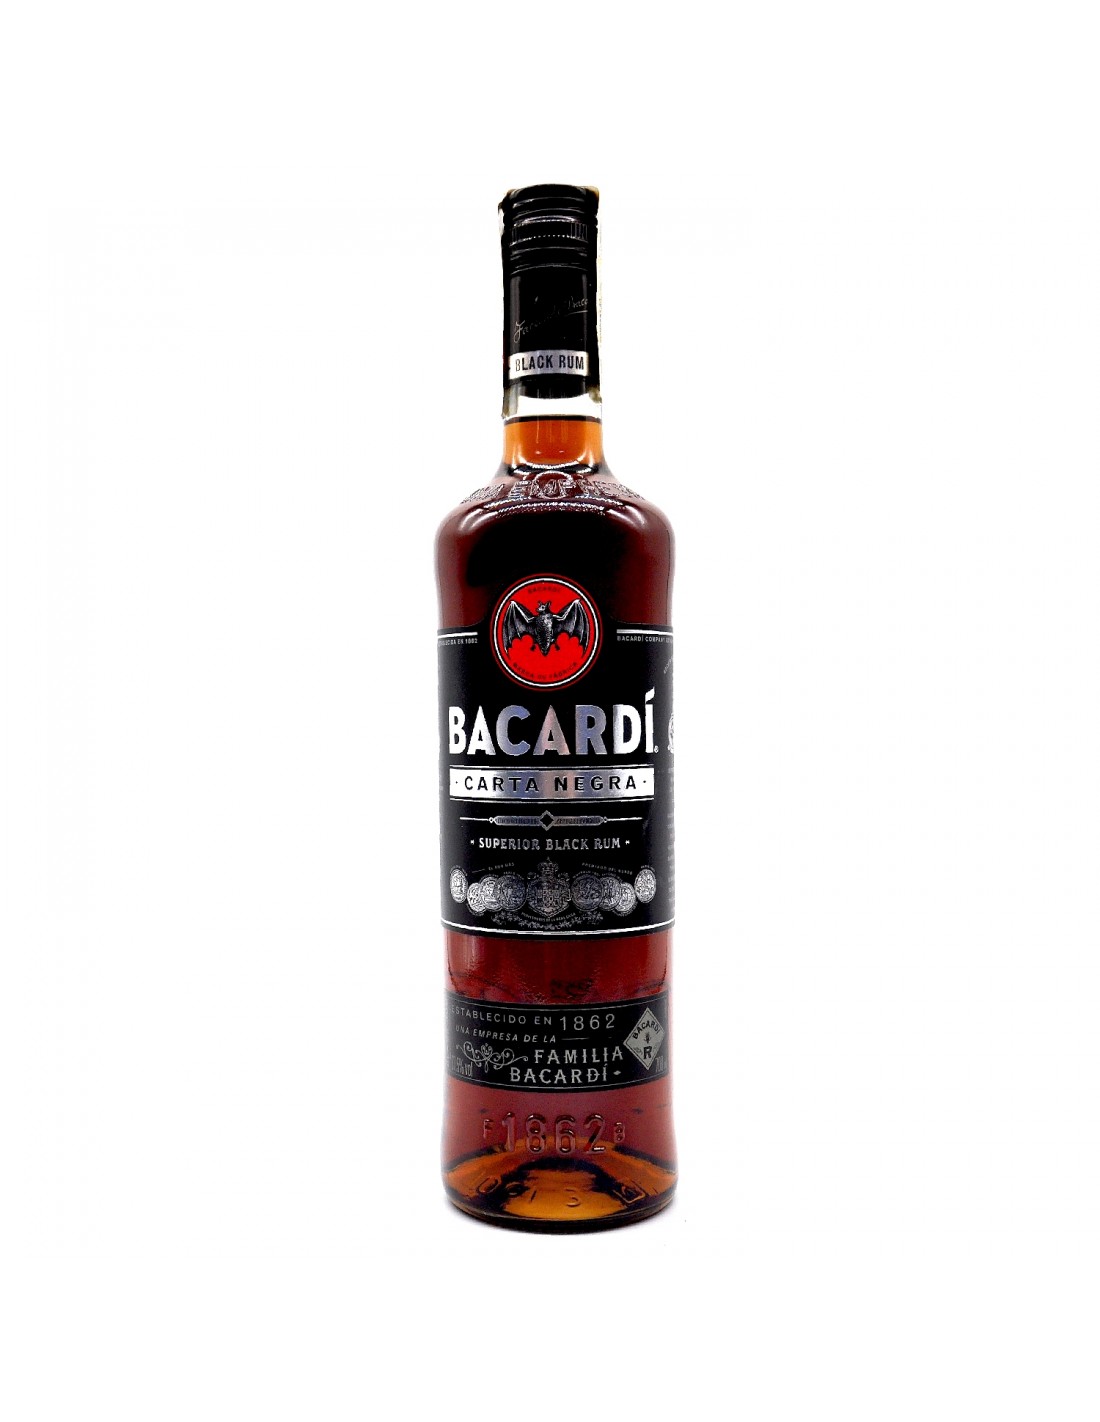 Rom negru Bacardi Carta Negra Superior Black, 37.5%, 0.7L, Cuba alcooldiscount.ro